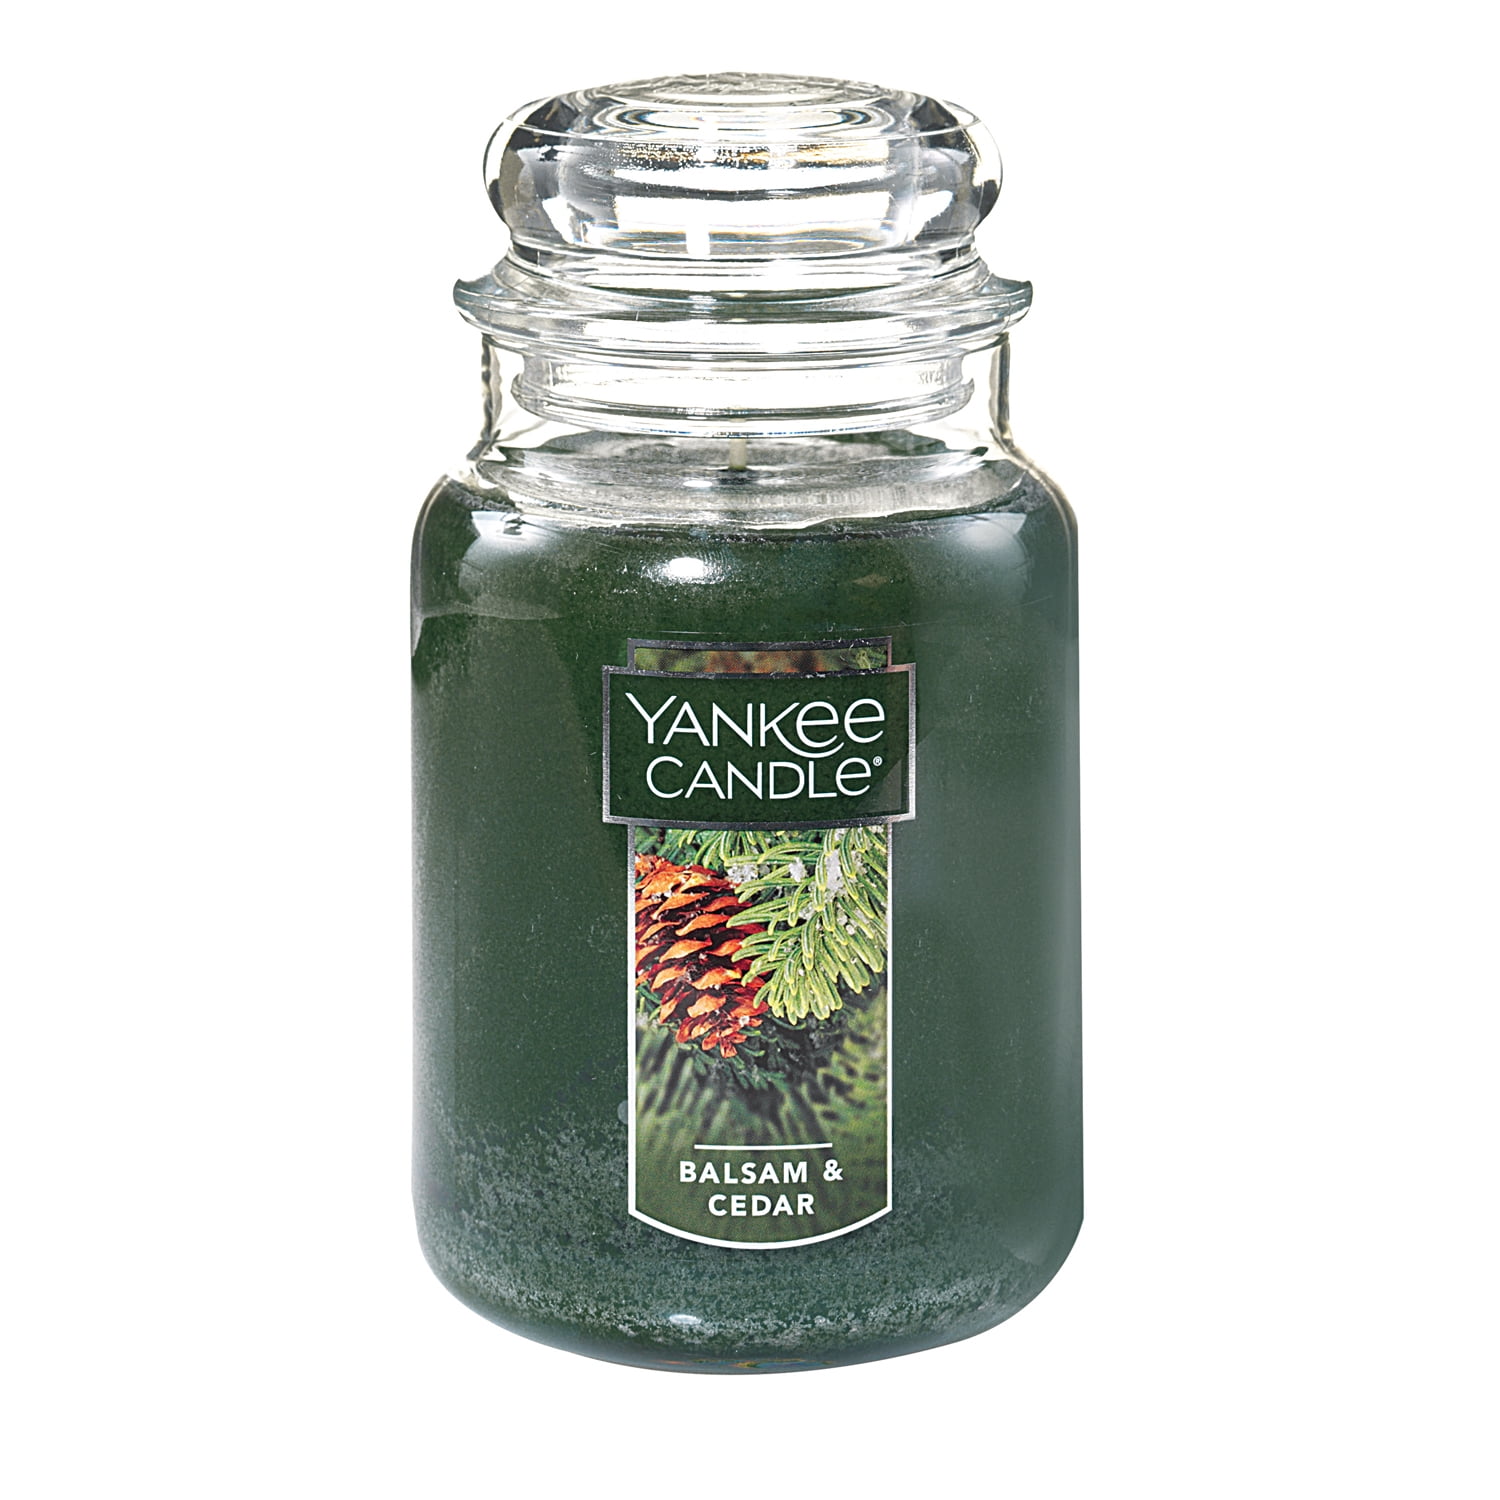 NEW Yankee Candle Balsam Cedar Candle & Snowflake Jar Sleeve Christmas Gift Set